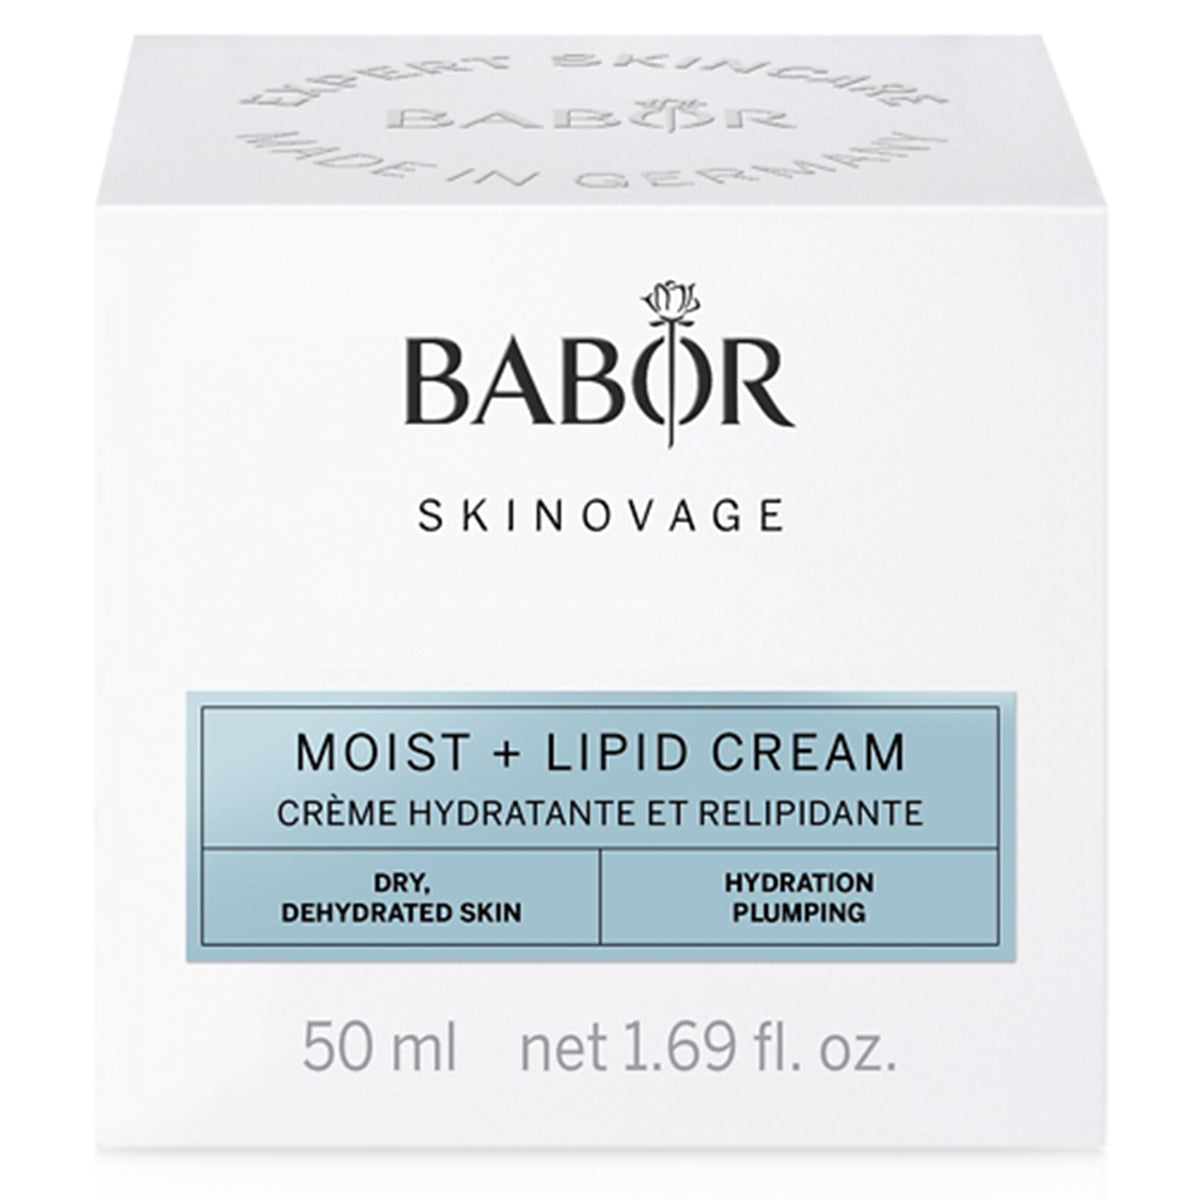 Skinovage Moisturizer + Lipid Cream